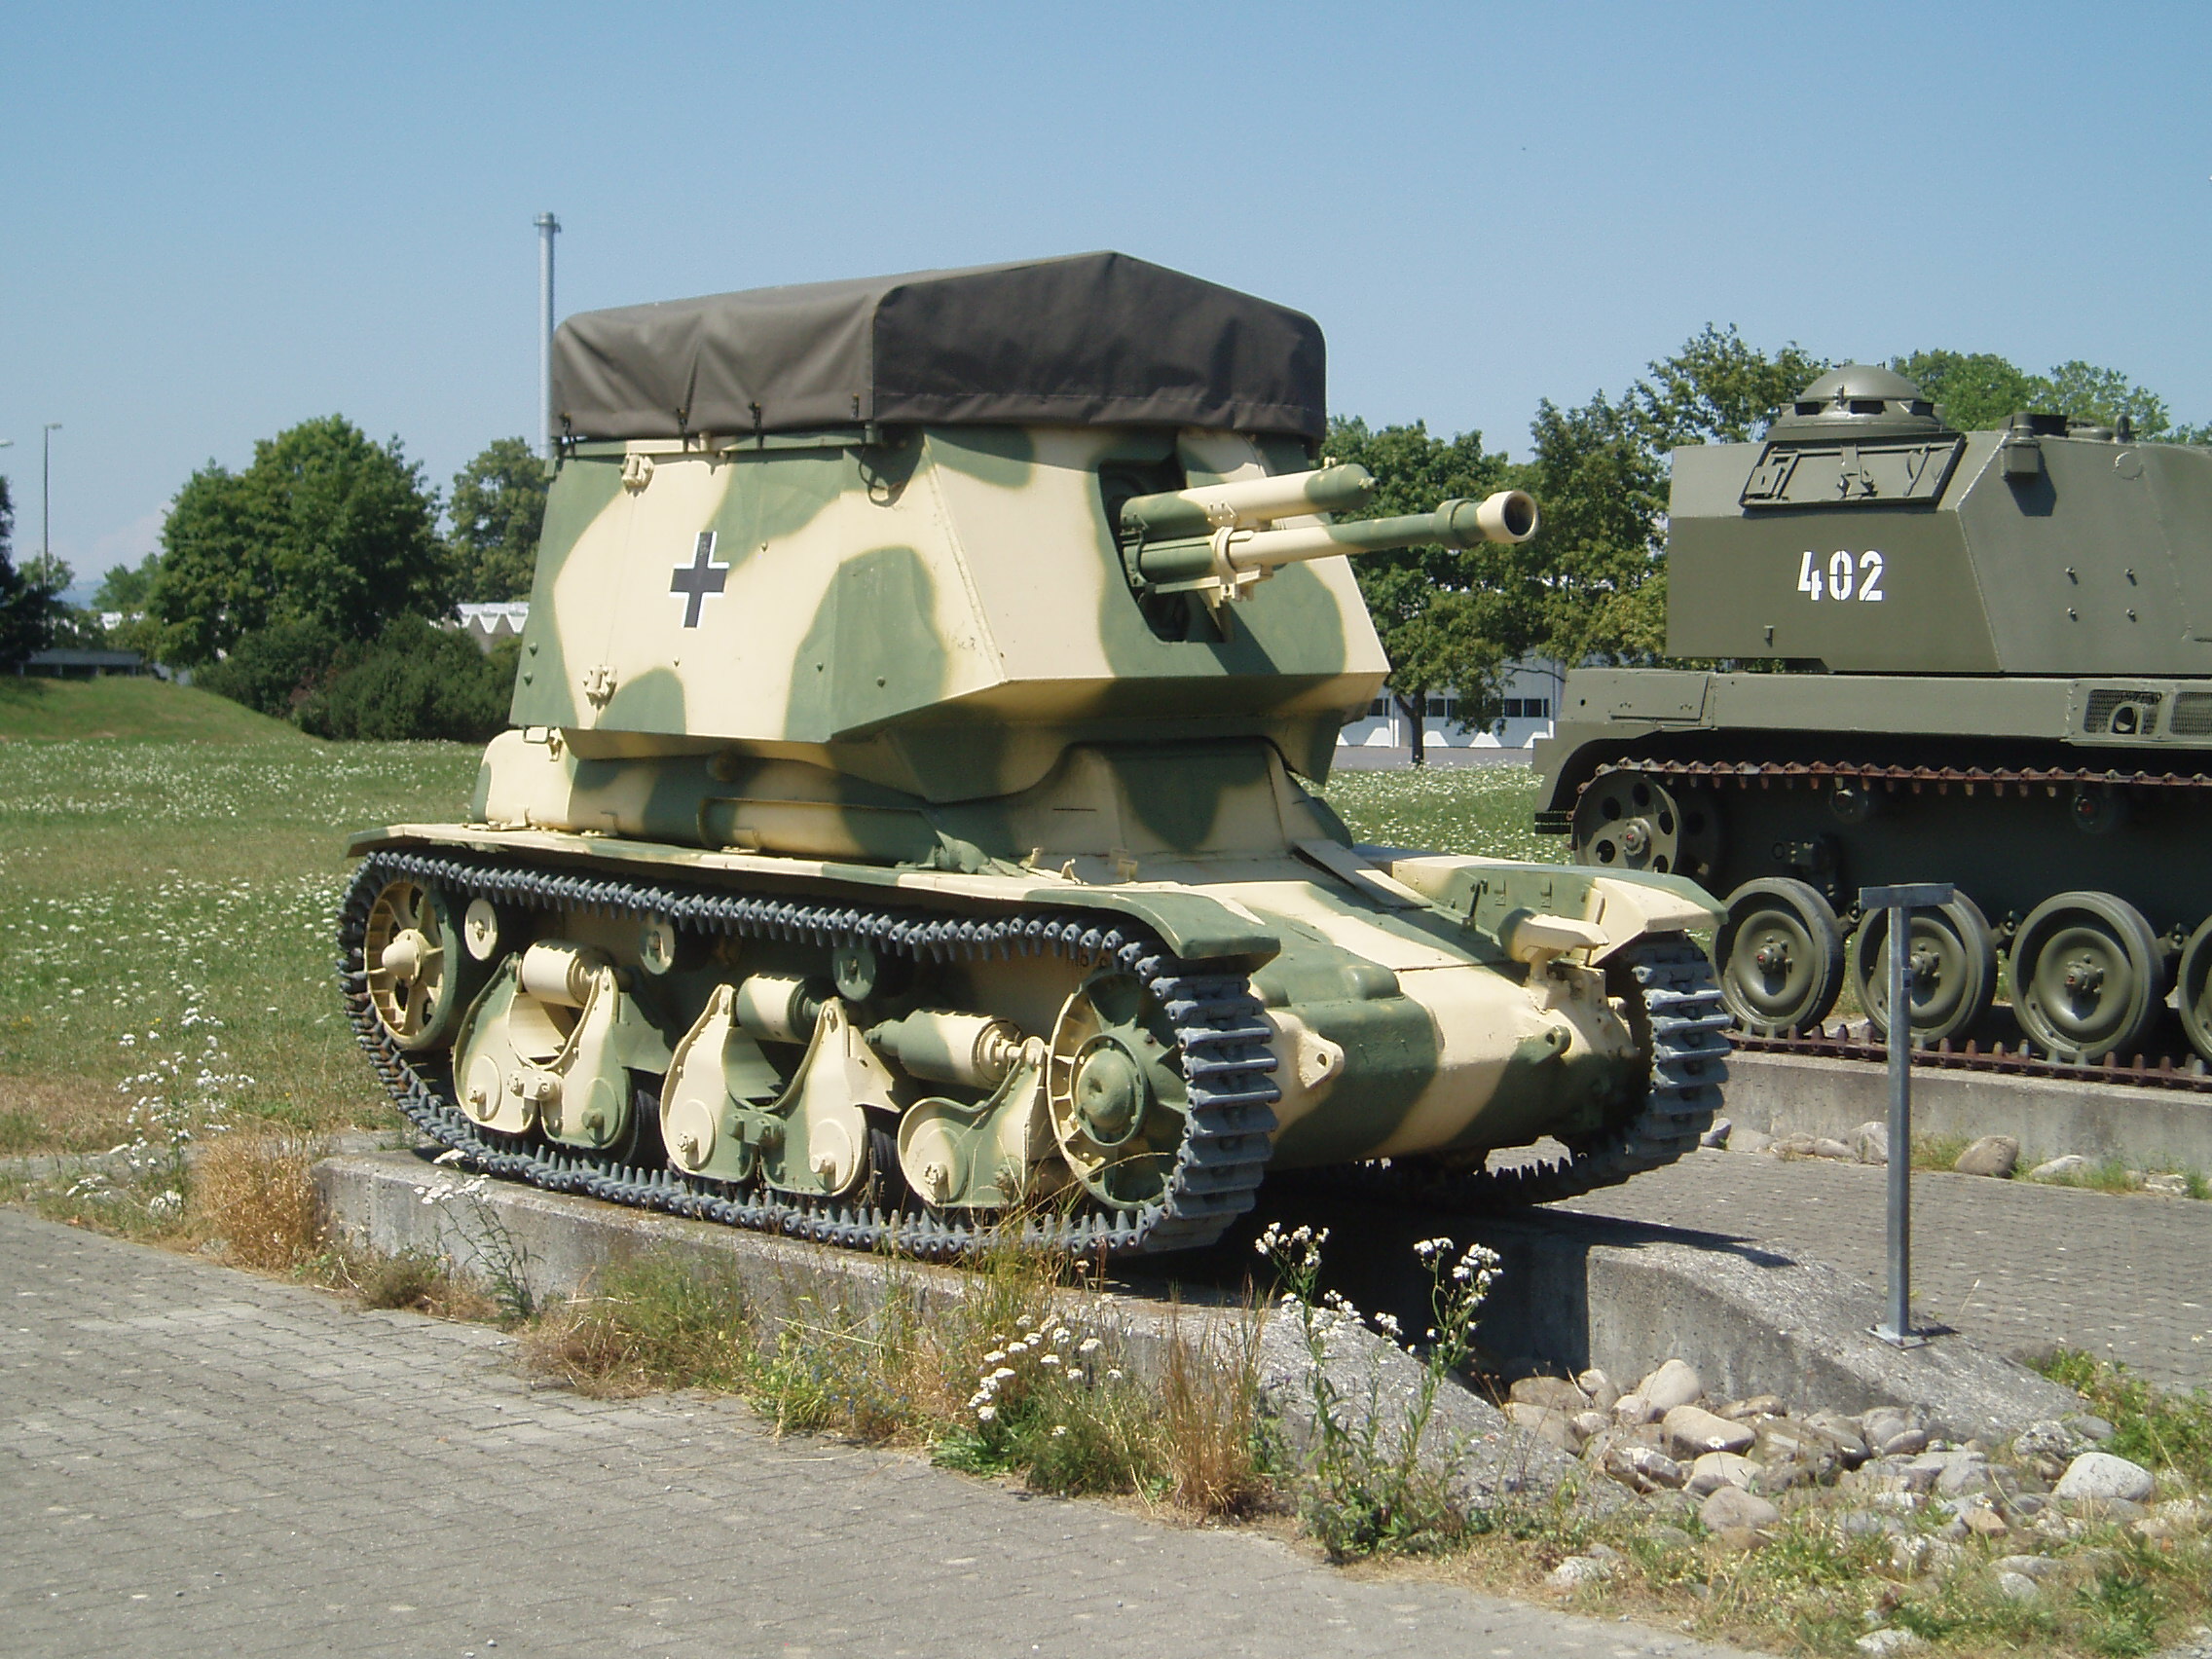 Panzerjäger I based on the R-35 - Wikimedia commons